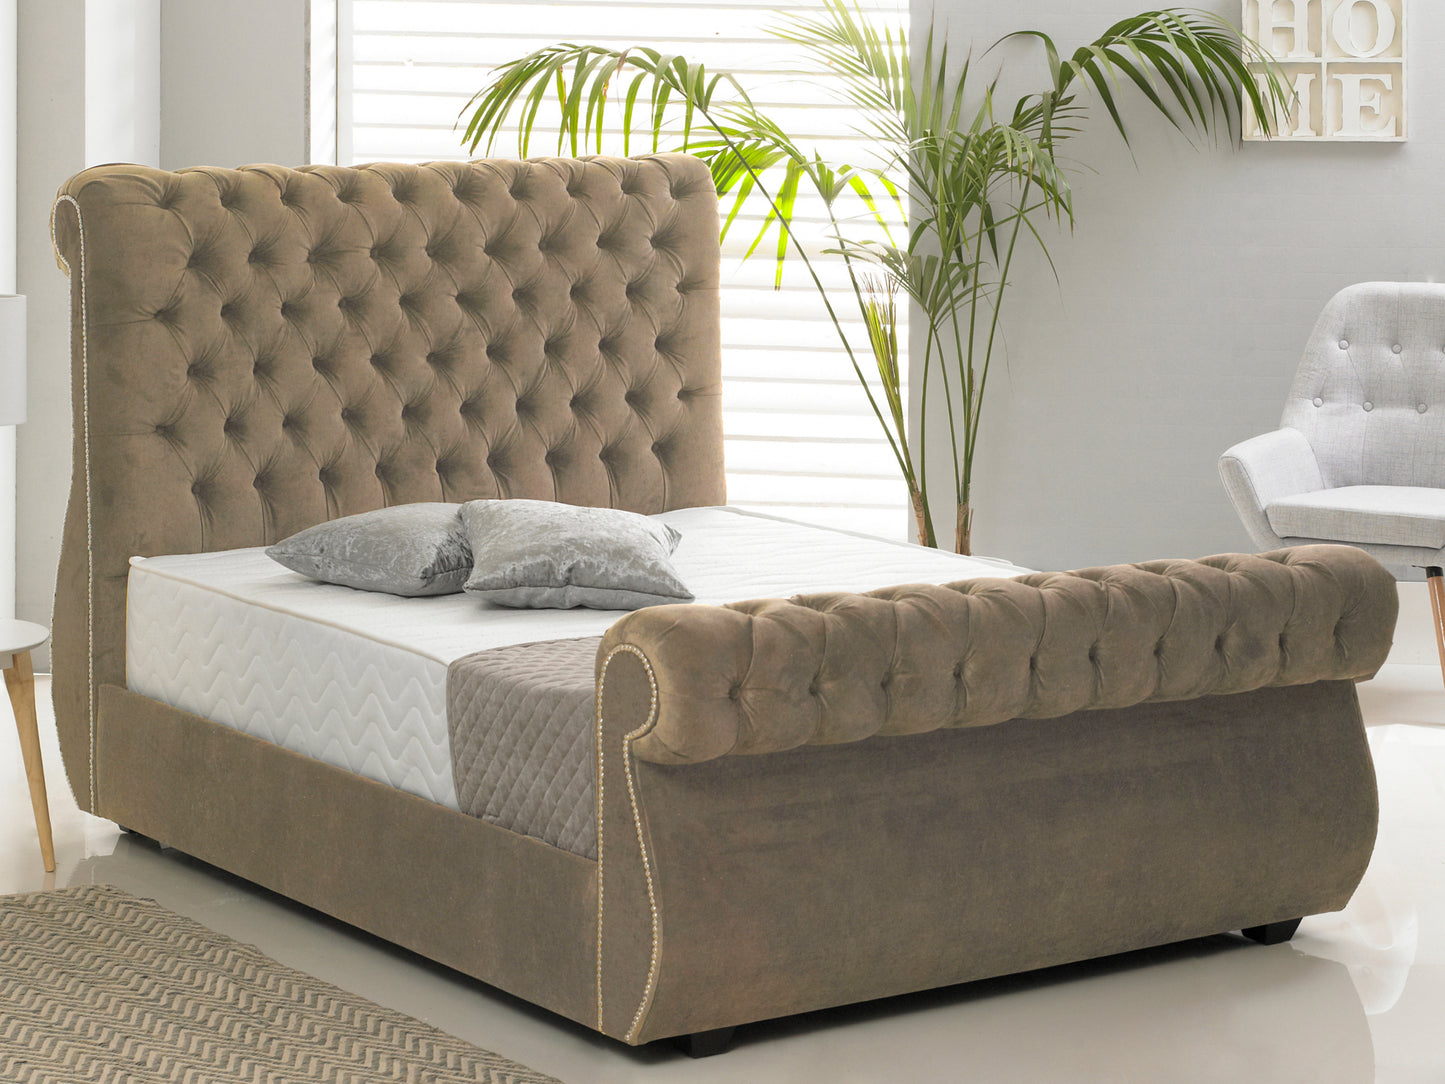 Chiswick Luxury Bed Frame in Hercules Mink